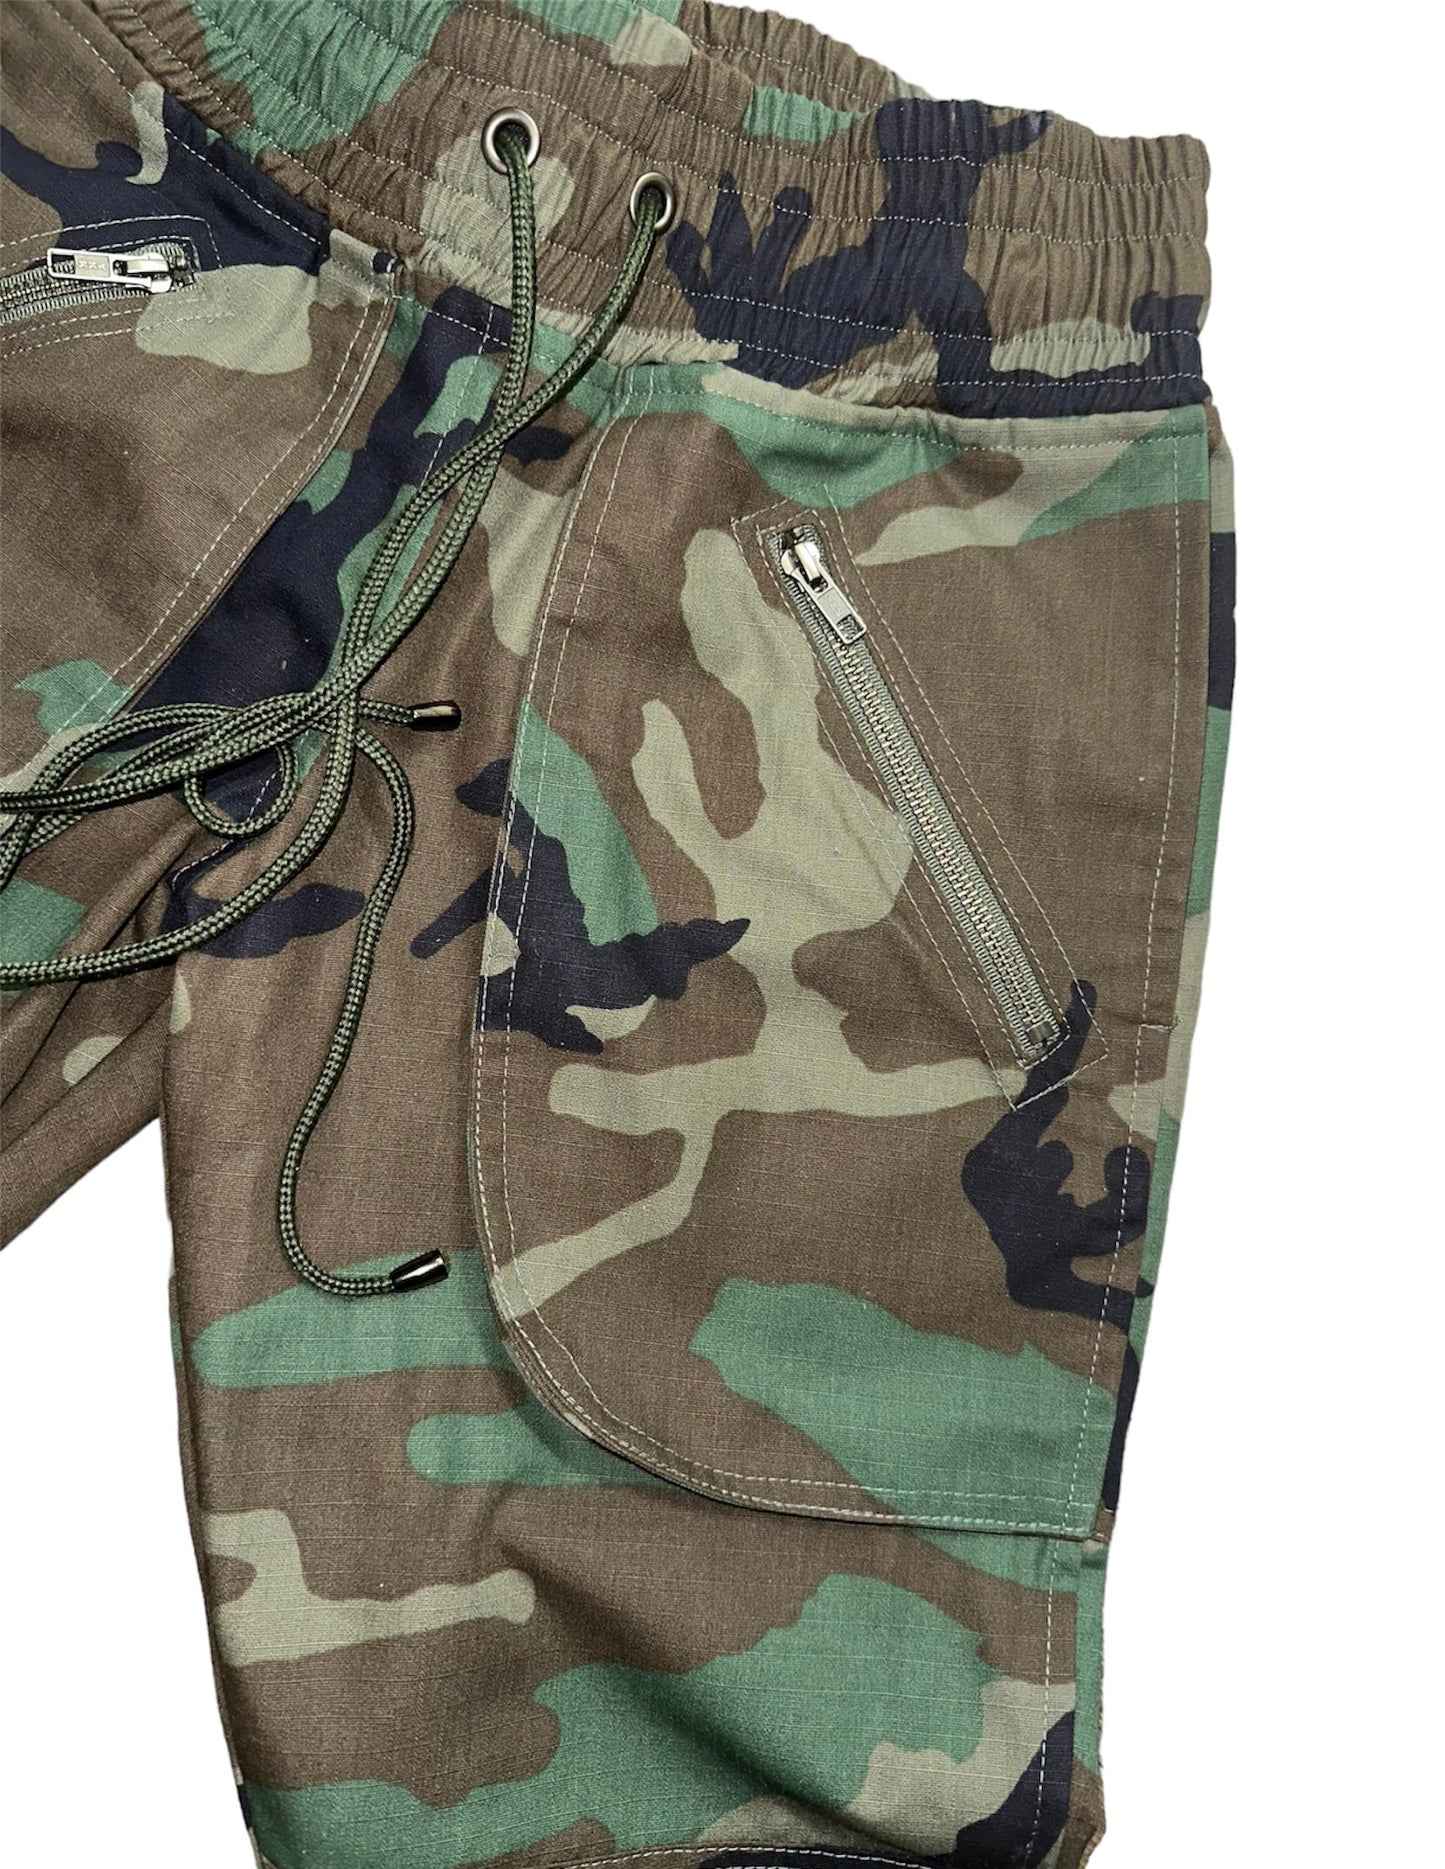 Camouflage Multi Pocket Pant (LIMITED)